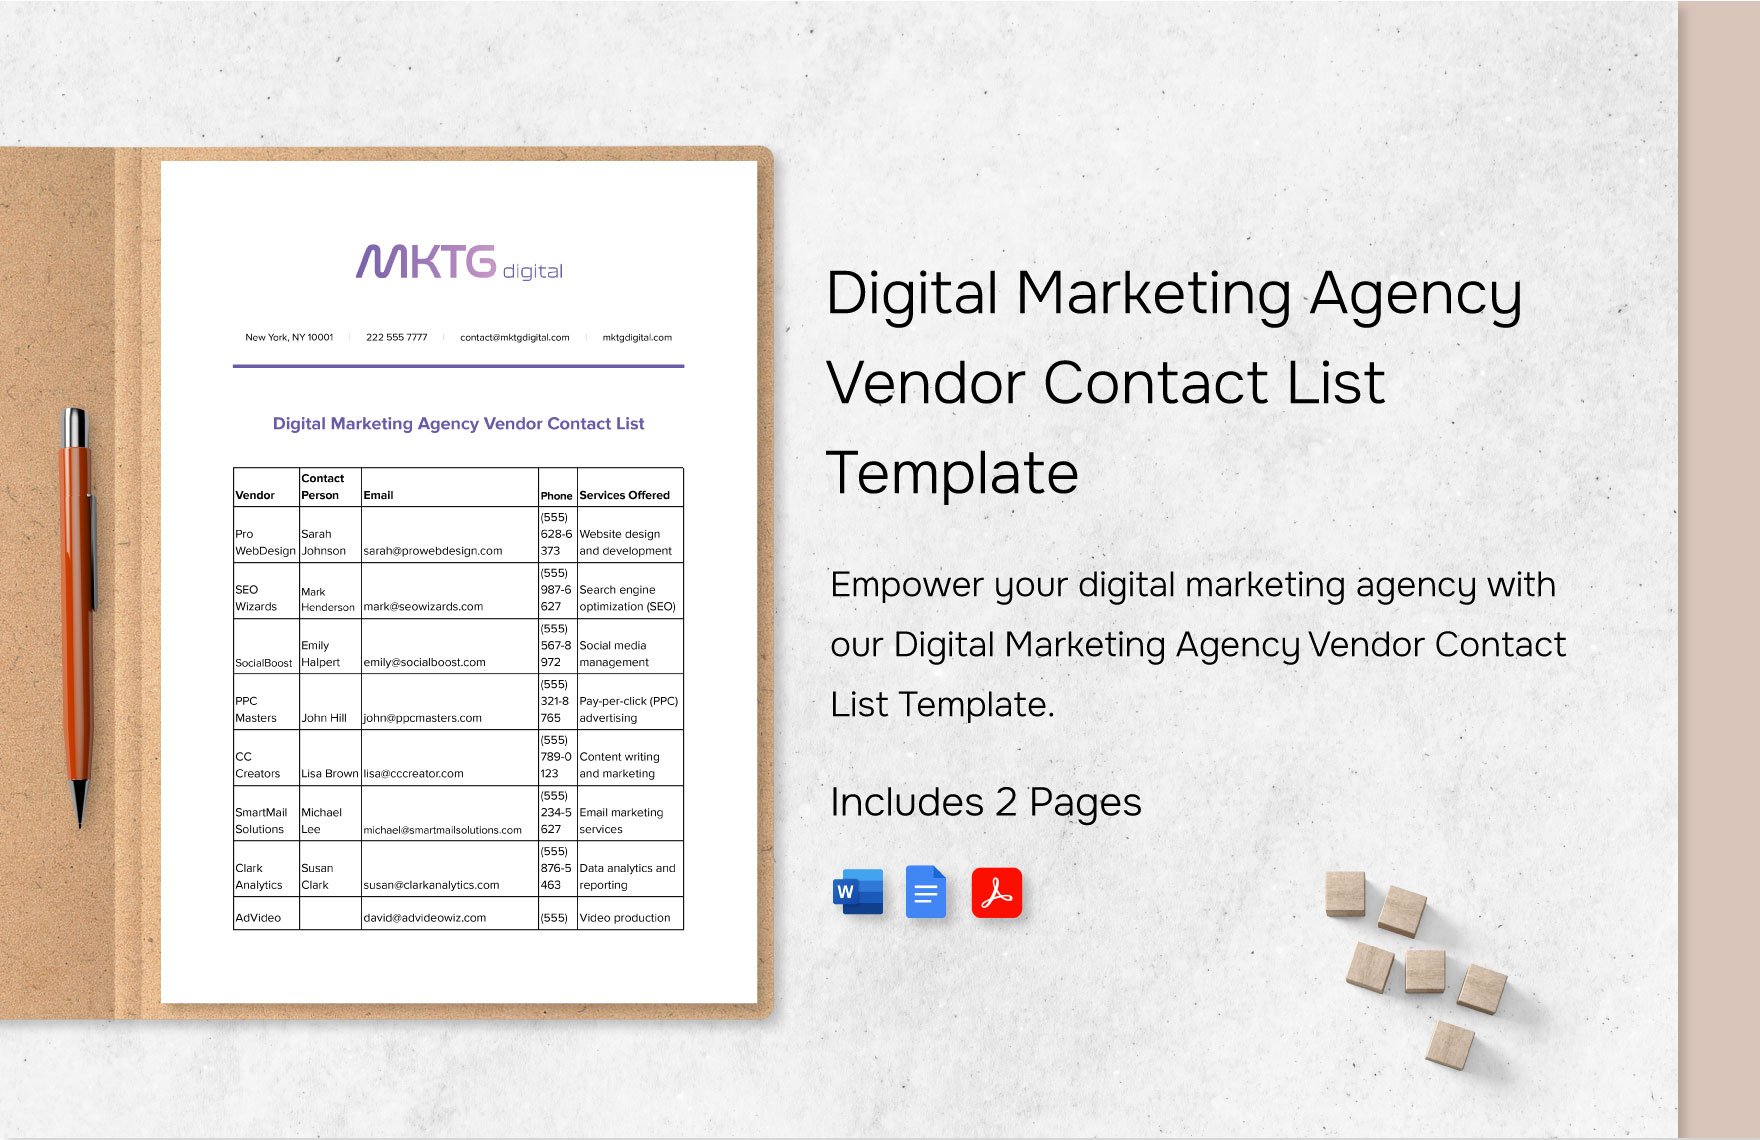 Digital Marketing Agency Vendor Contact List Template in Word, Google Docs, PDF